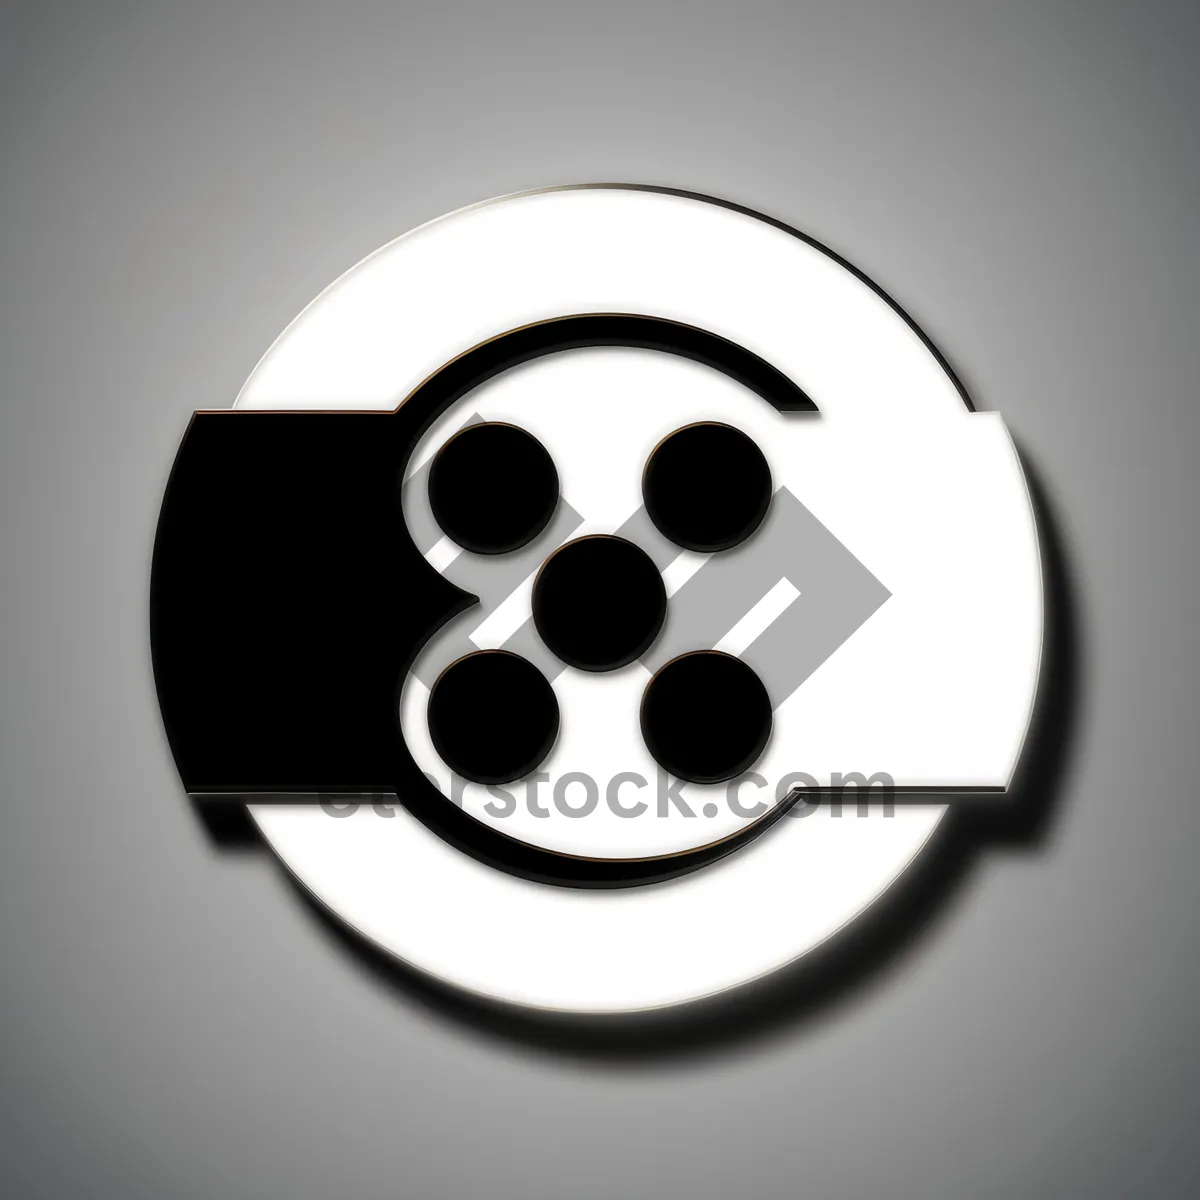 Picture of Shiny Black Film Reel Icon: Circular Button Design